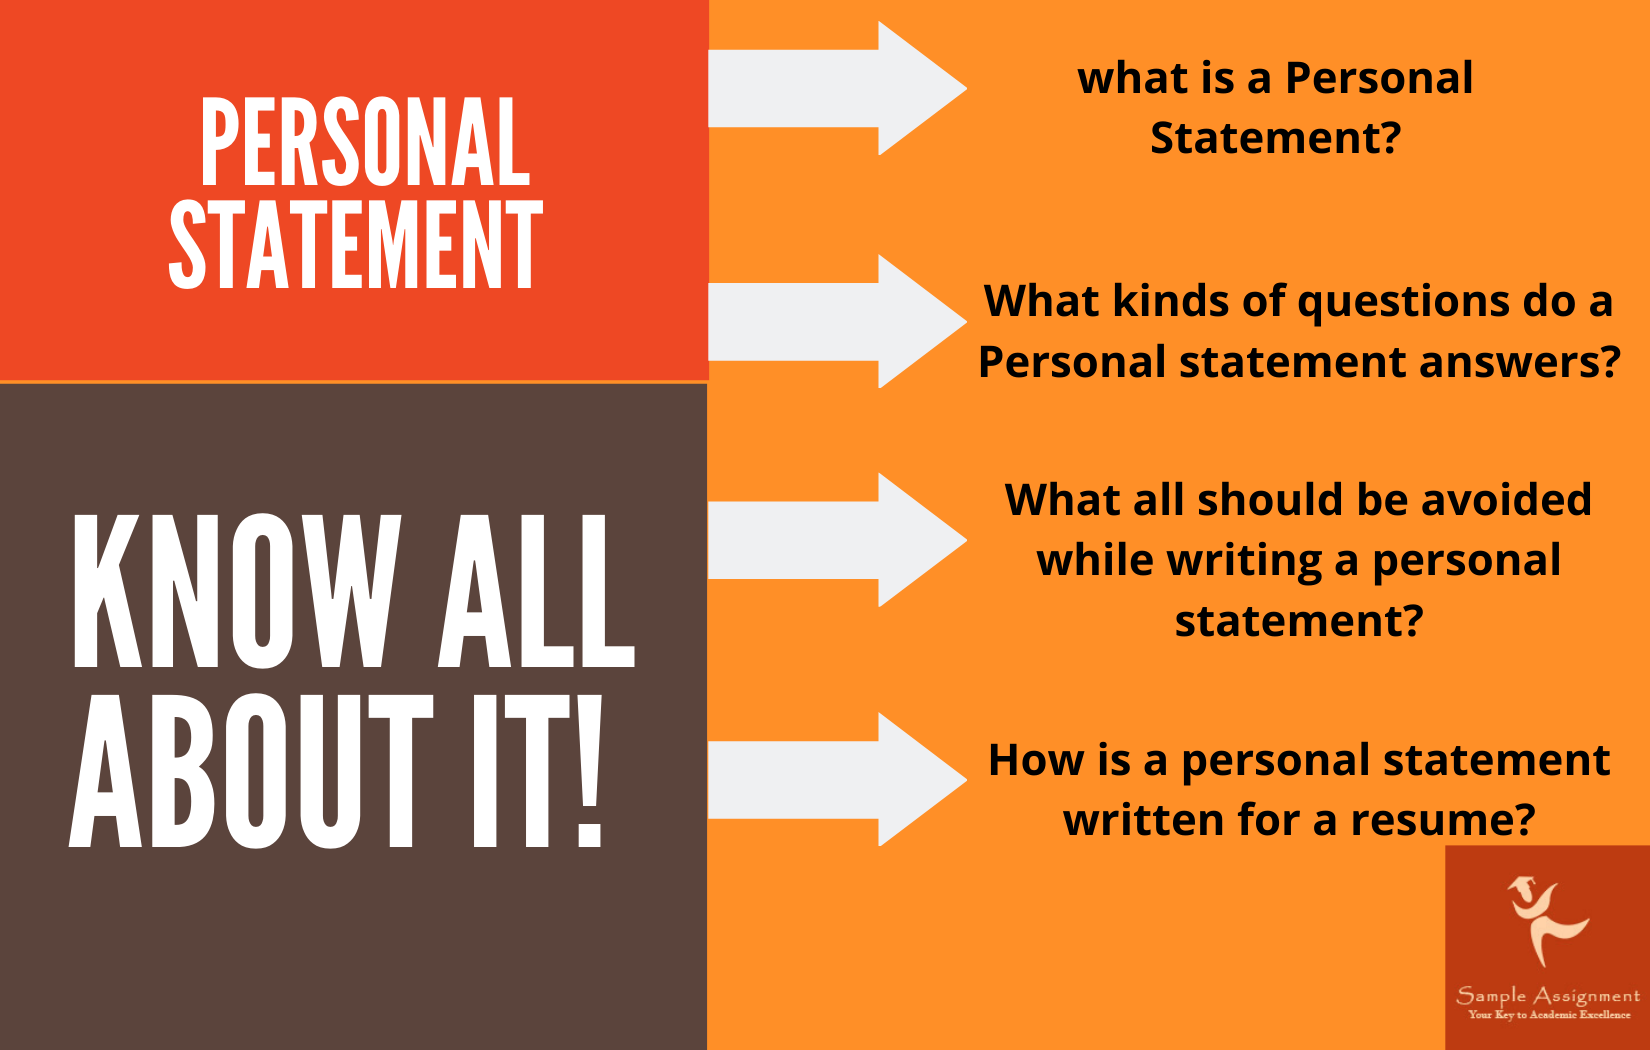 Personal statement writer service